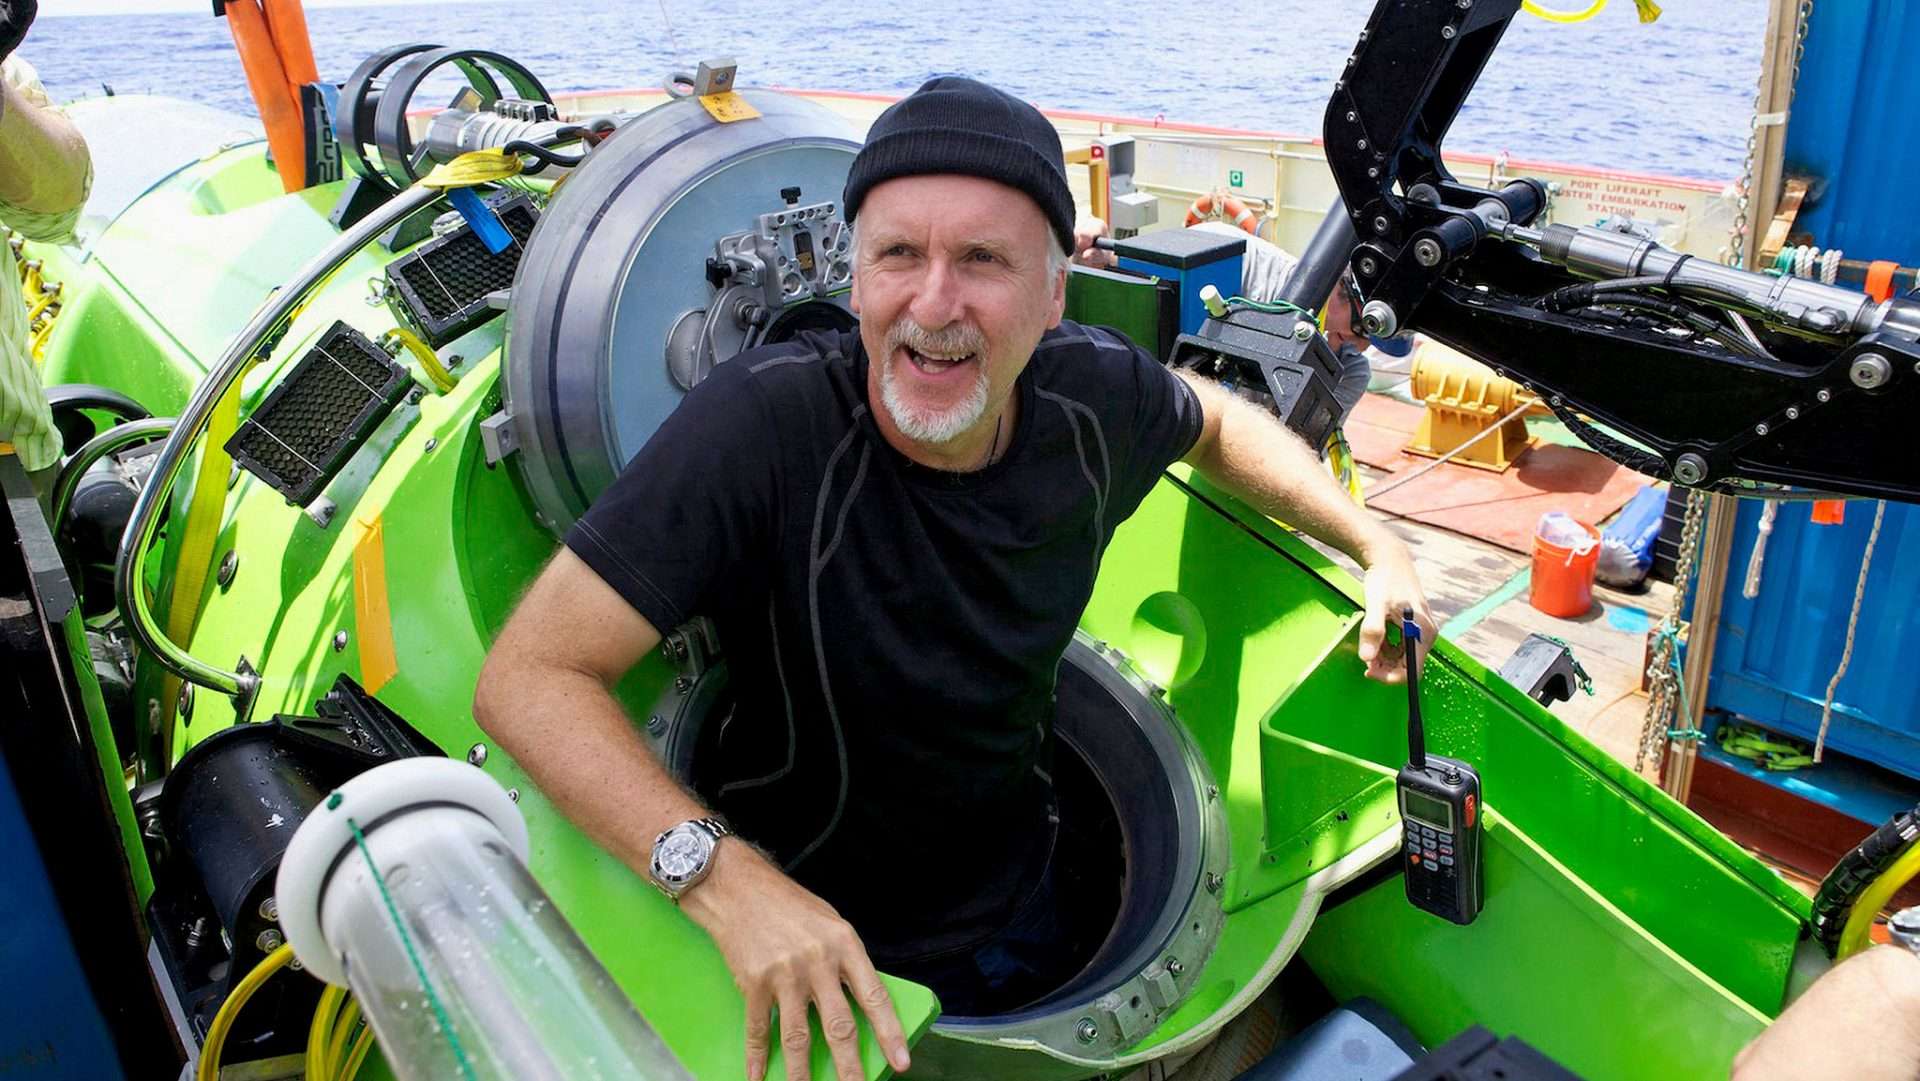 James-Cameron-Deepsea-Challenger-wyprawa-na-dno-Rowu-Marianskiego-divers24.pl_-1920x1081.jpg